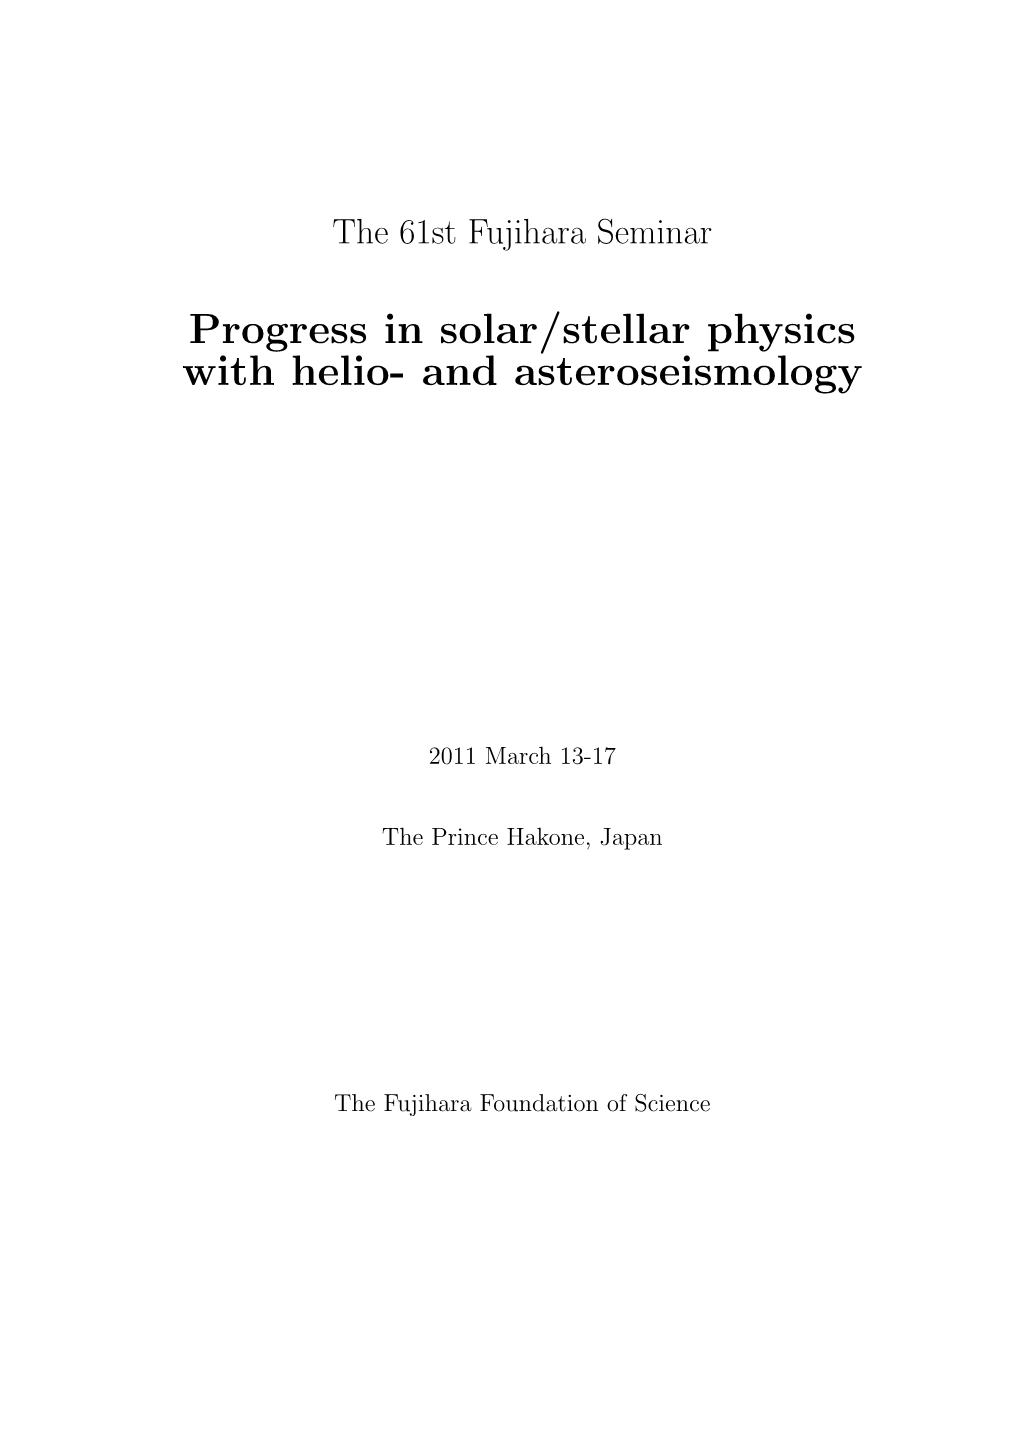 Progress in Solar/Stellar Physics with Helio- and Asteroseismology